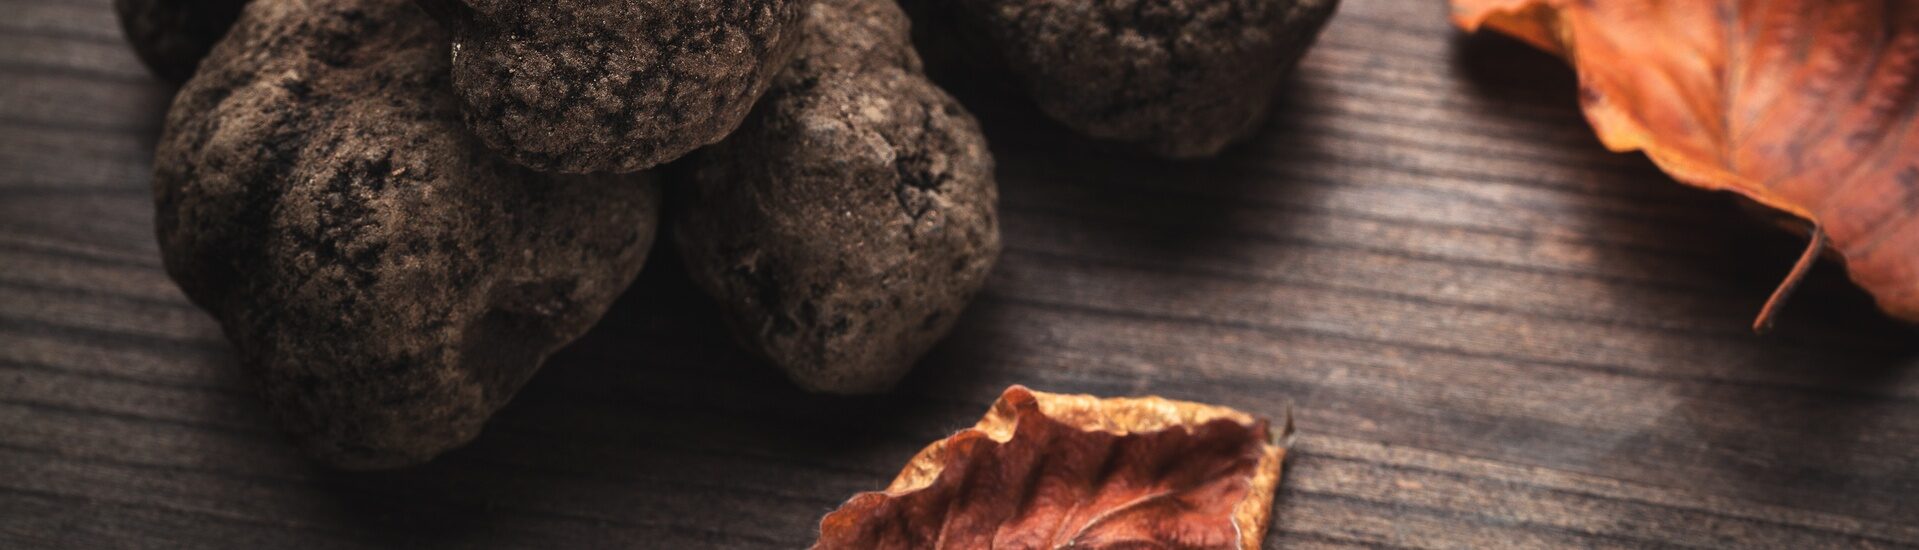 What do truffles mean? by Rowan Jacobsen